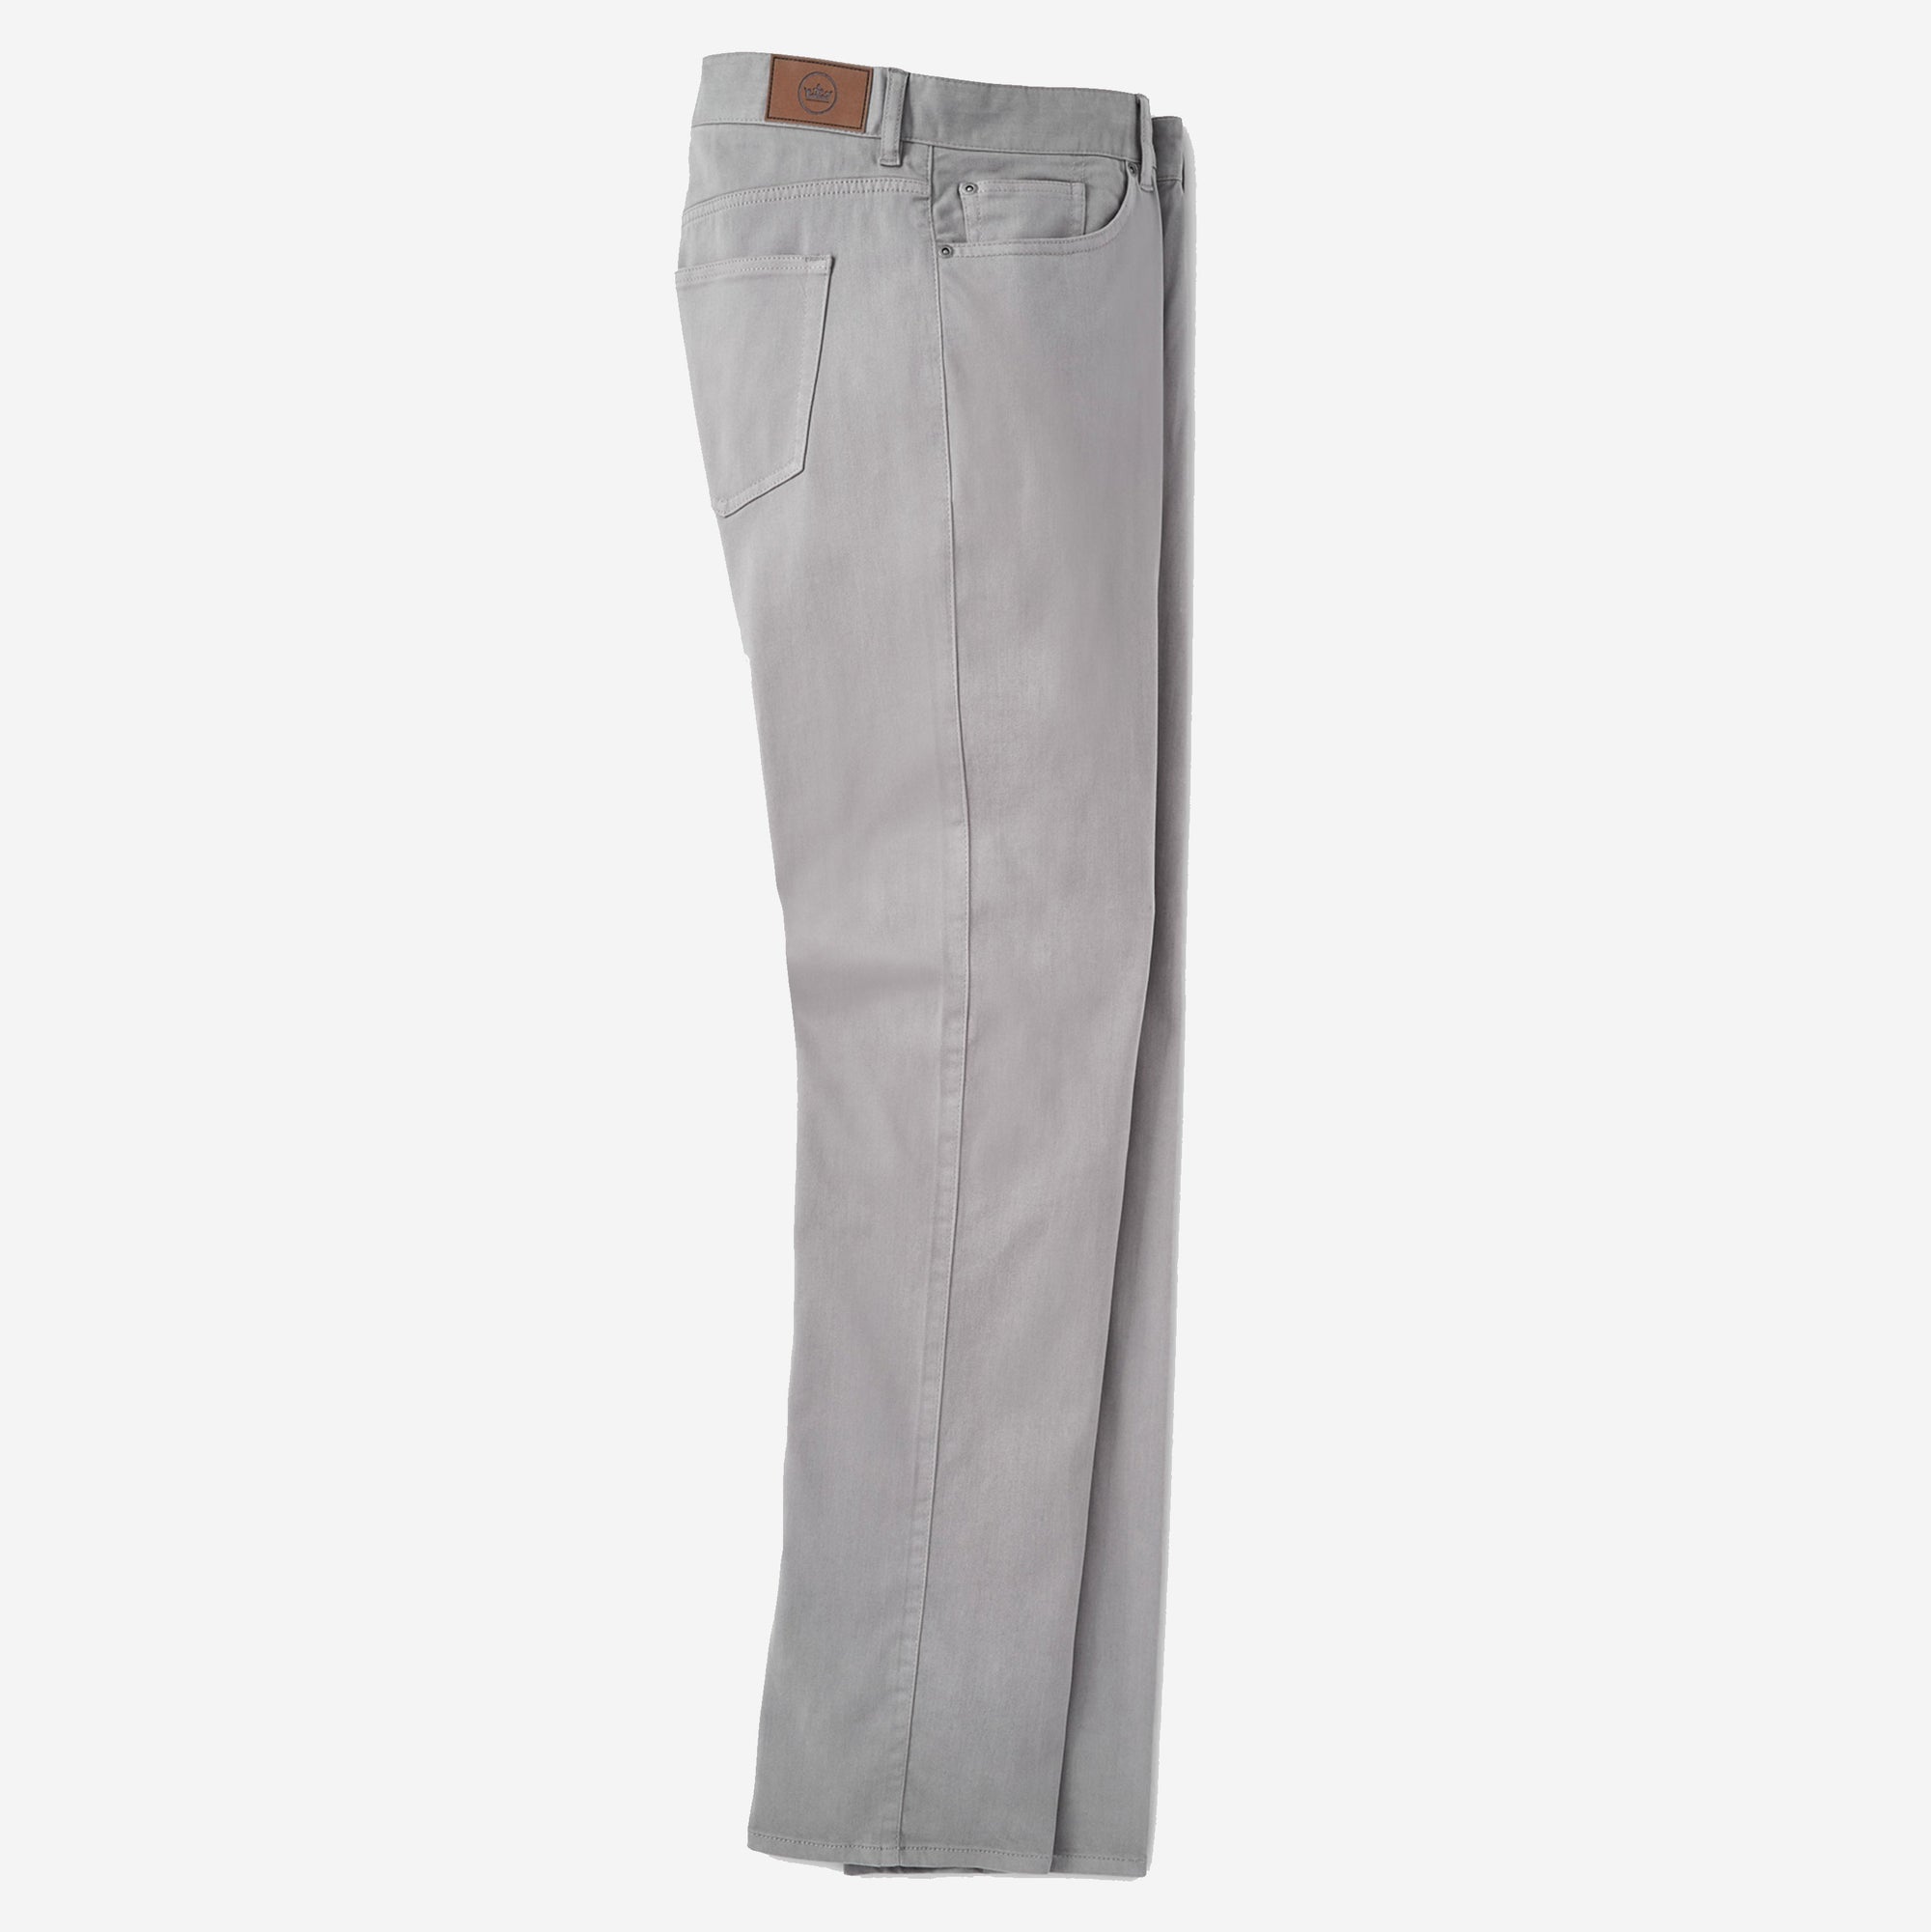 Peter Millar Regular-fit Ultimate Sateen Five-pocket Pants In Navy